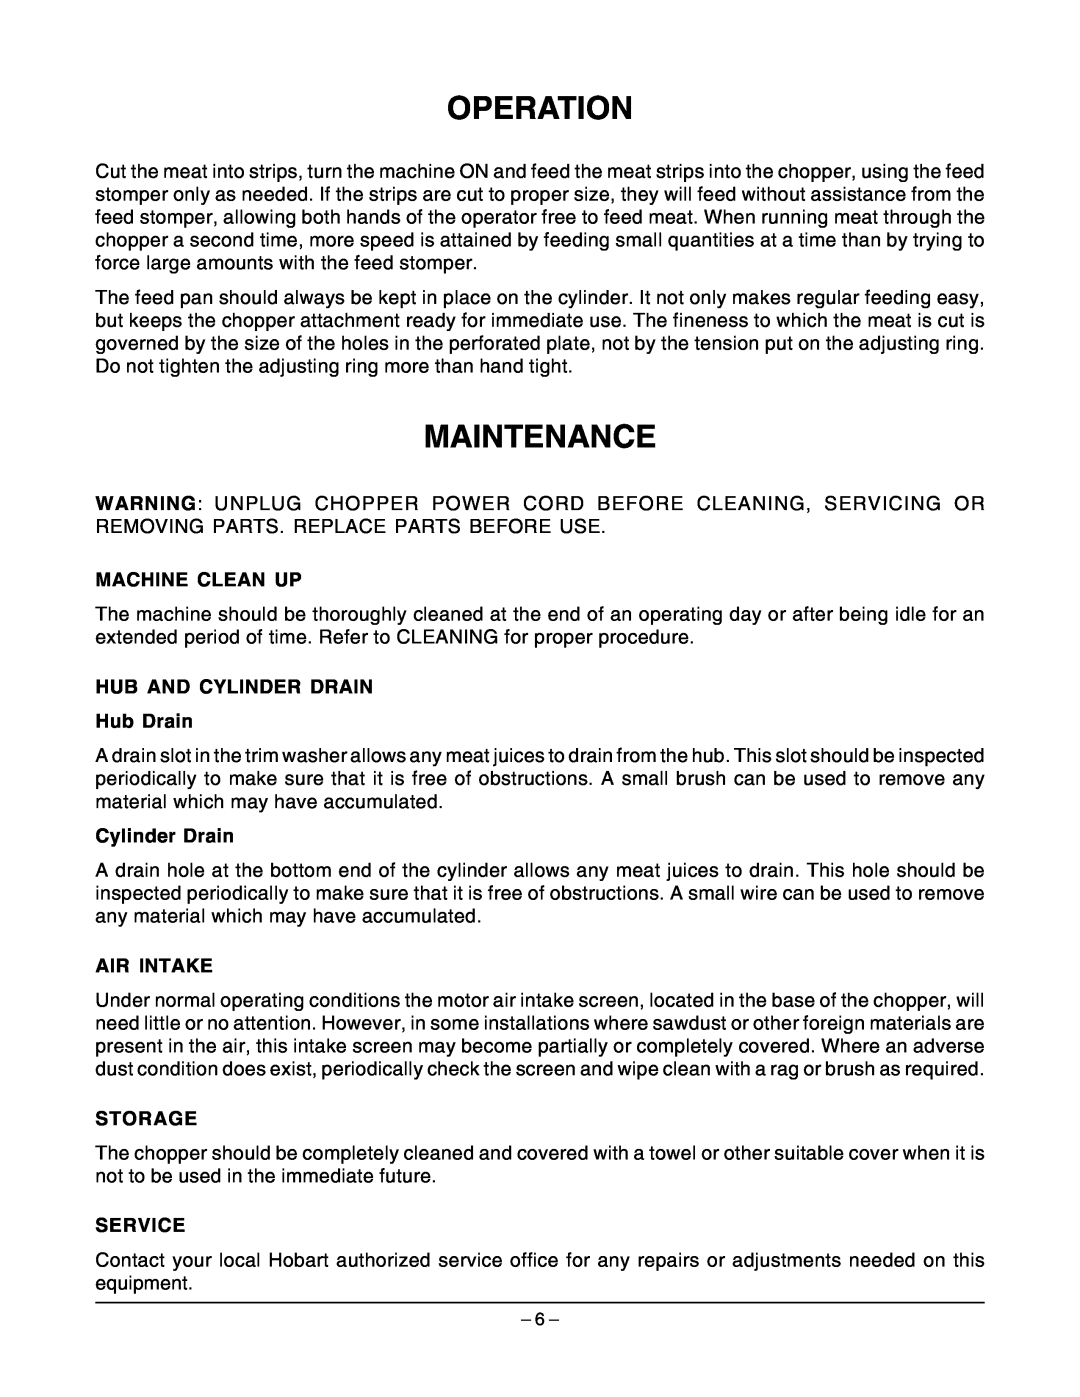 Hobart 4822 ML-136102 Operation, Maintenance, Machine Clean Up, HUB AND CYLINDER DRAIN Hub Drain, Cylinder Drain, Storage 